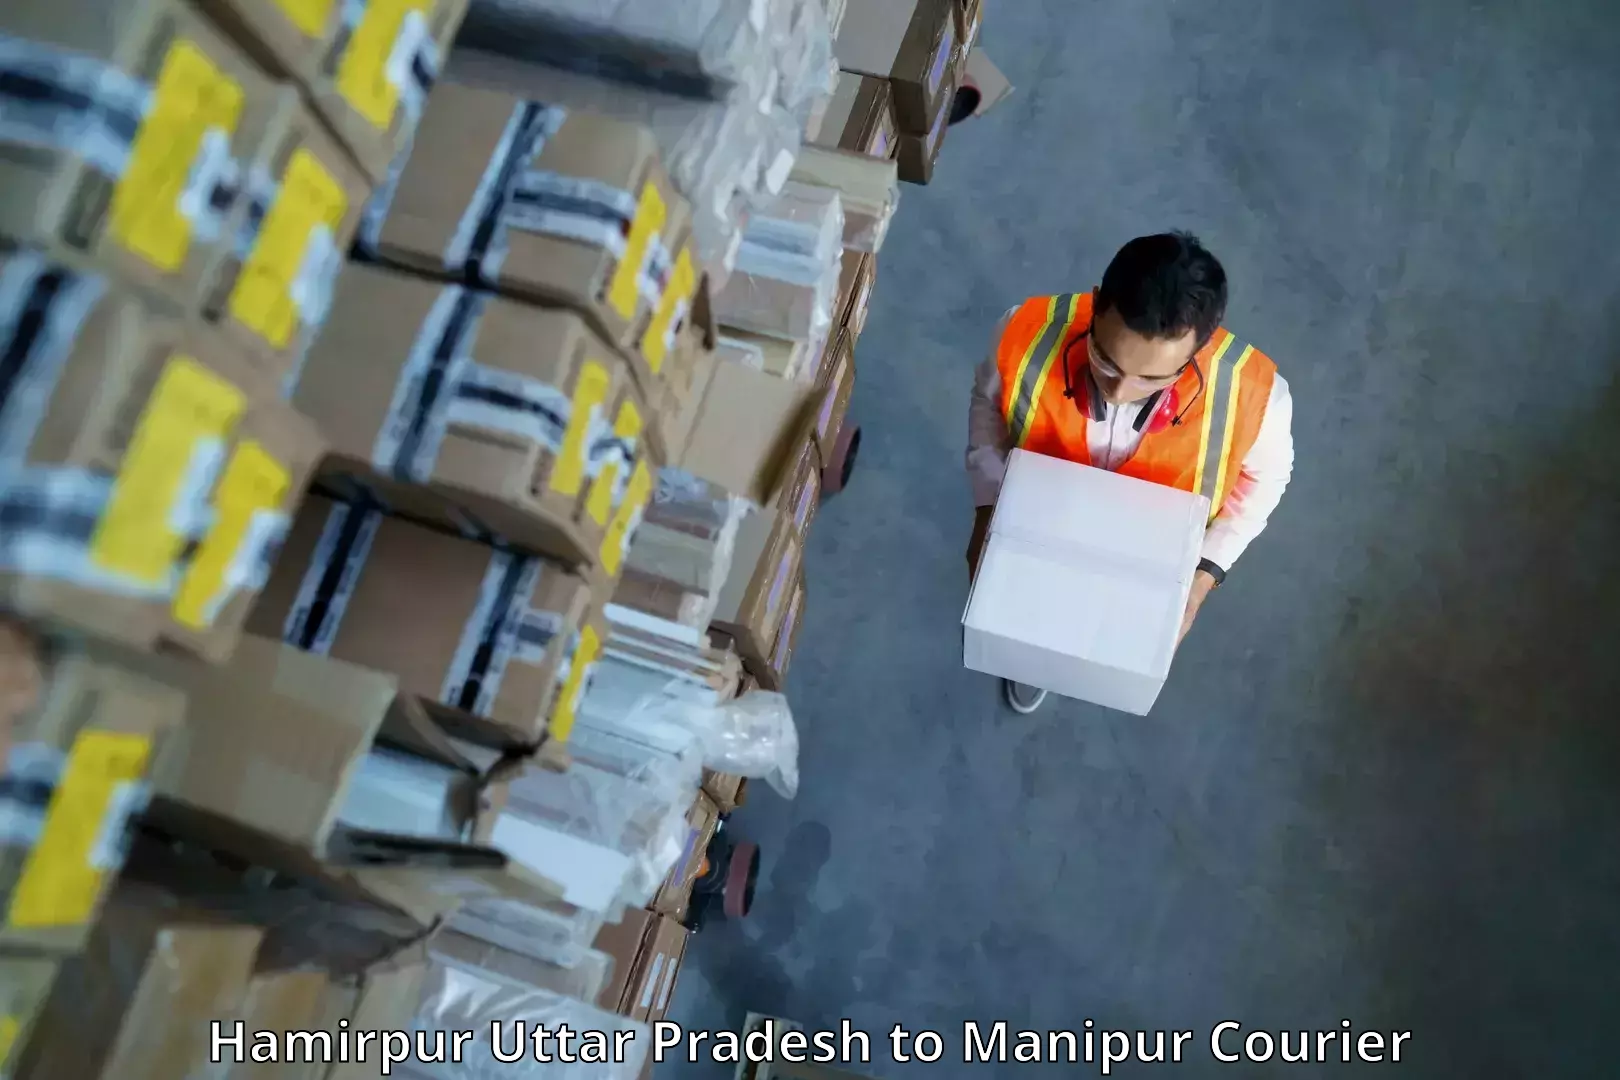 Courier app Hamirpur Uttar Pradesh to Chandel